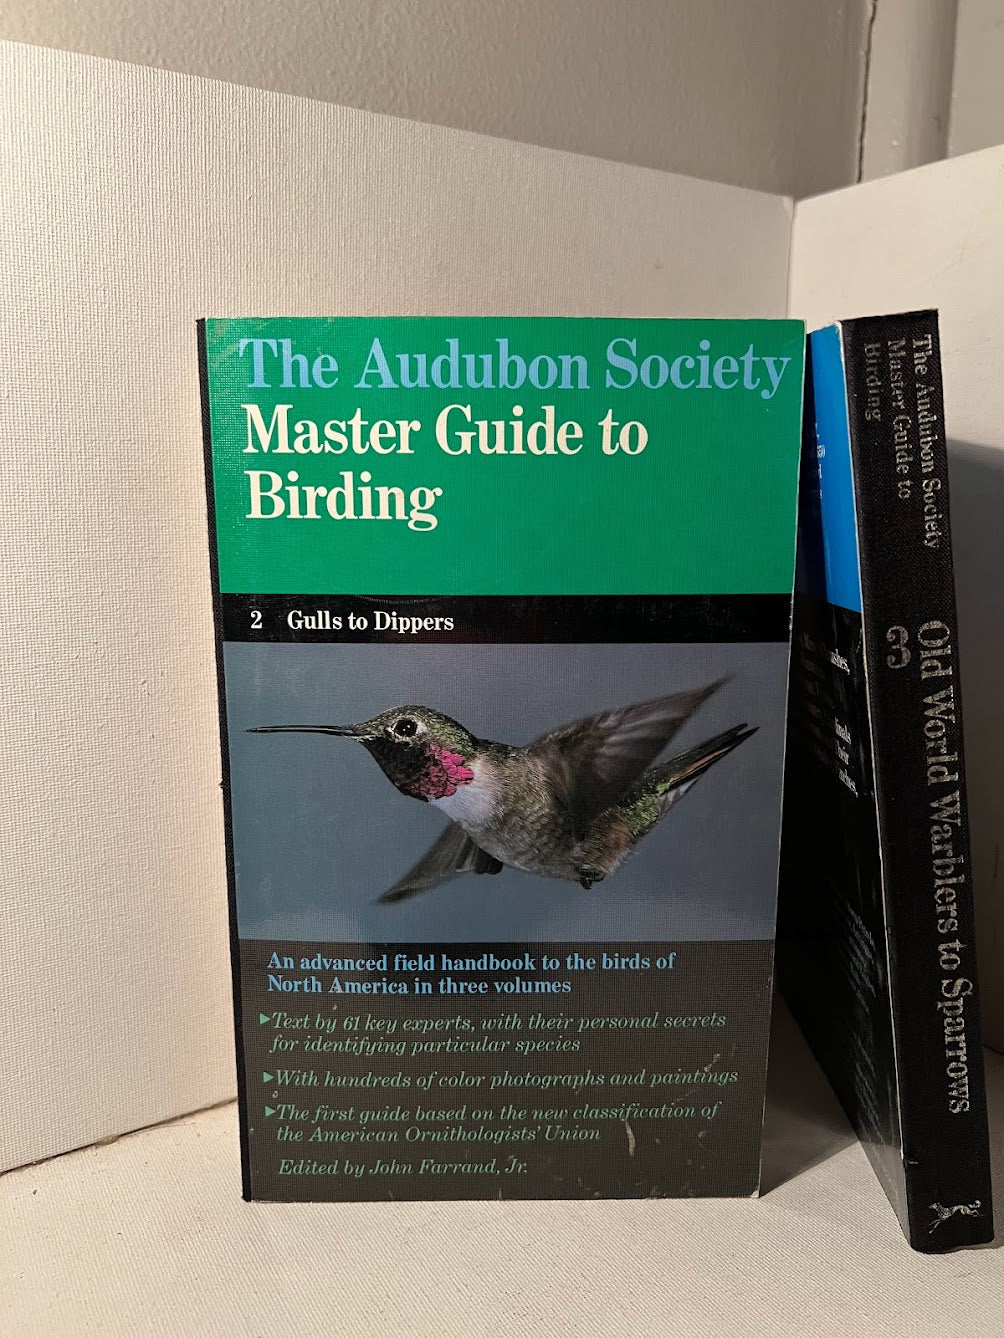 The Audubon Society Master Guide to Birding